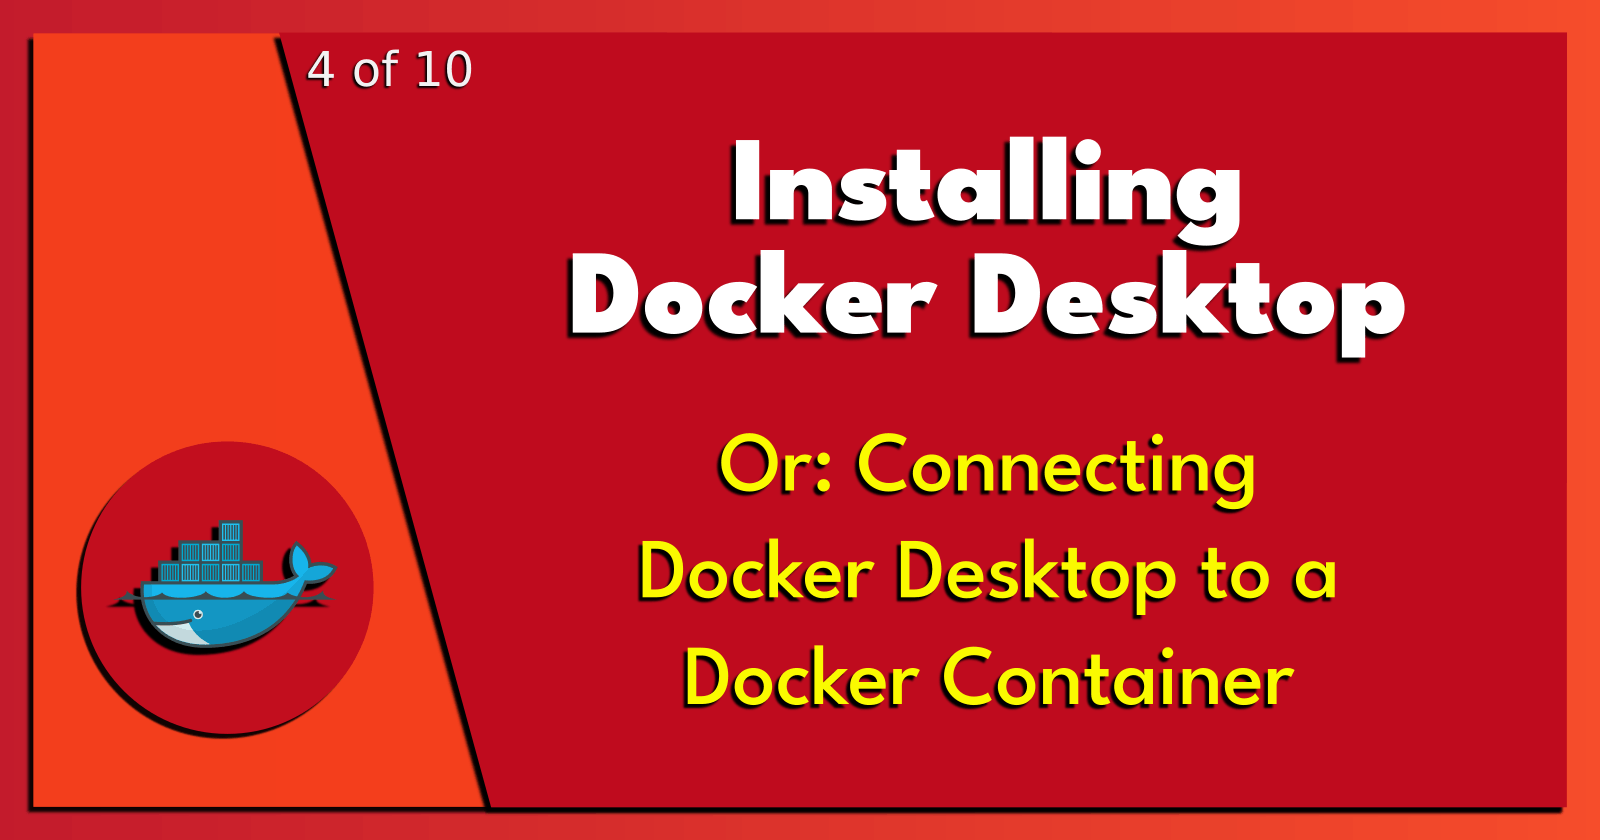 4 of 10: Installing Docker Desktop.